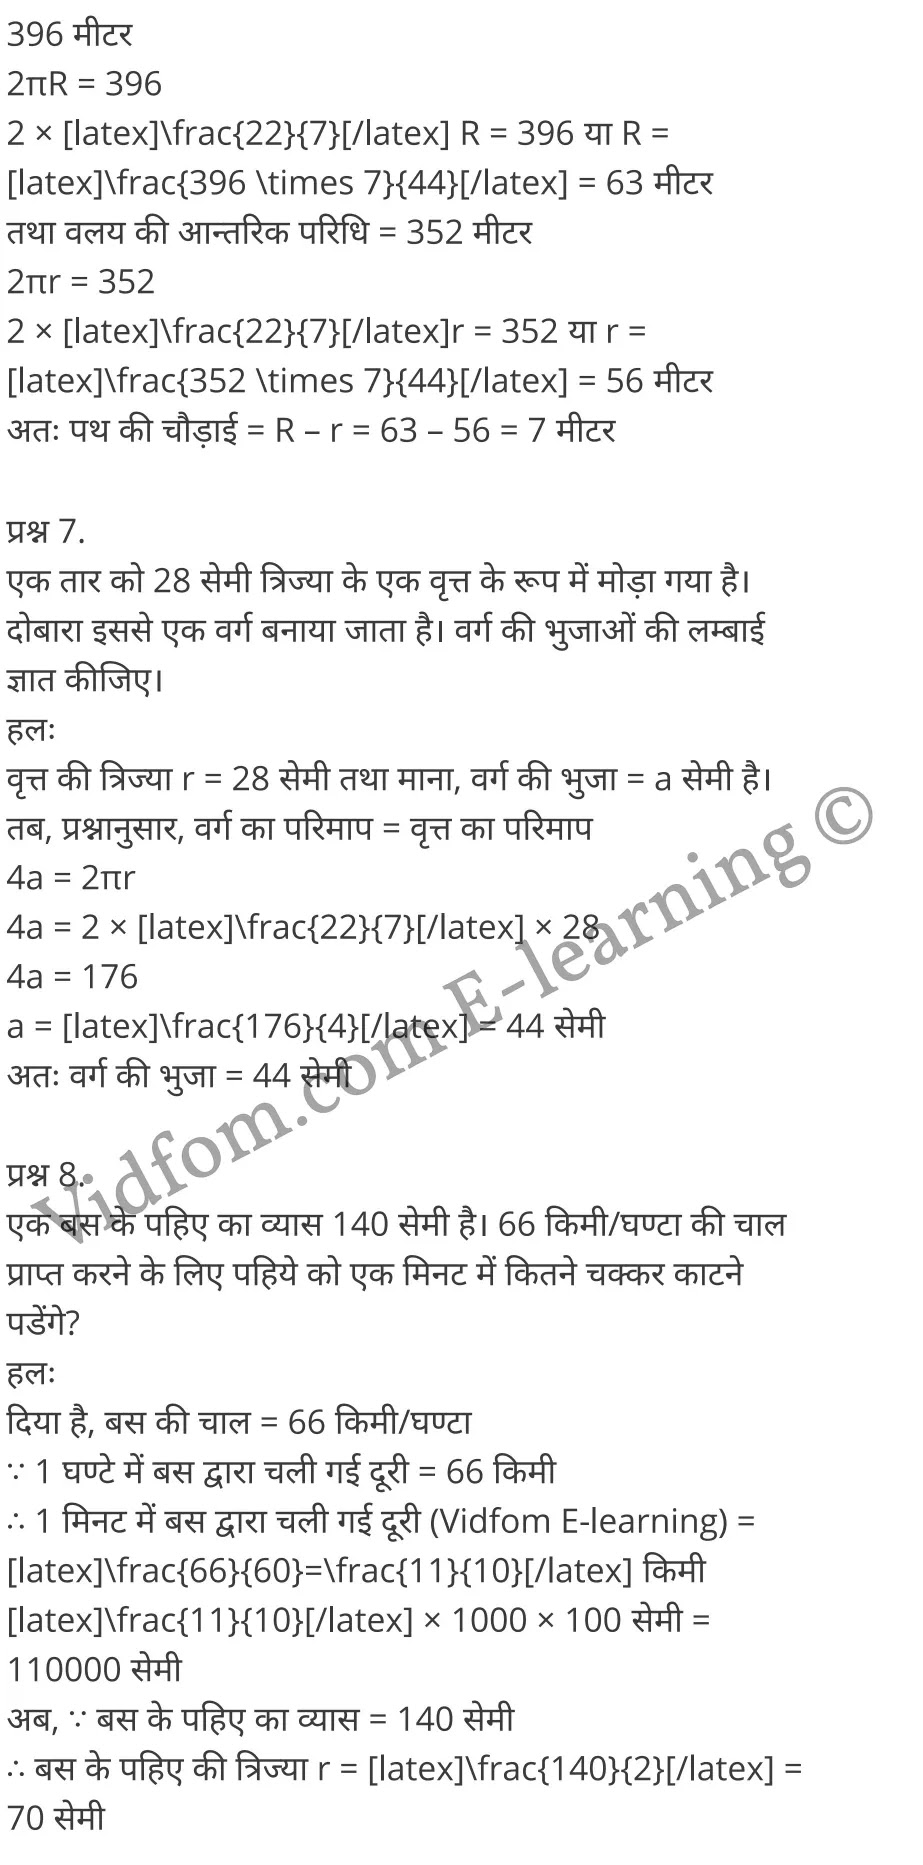 Chapter 12 Area Related to Circles Ex 12.1, Chapter 12 Area Related to Circles Ex 12.2, Chapter 12 Area Related to Circles Ex 12.3, Chapter 12 Area Related to Circles Ex 12.4, कक्षा 10 बालाजी गणित  के नोट्स  हिंदी में एनसीईआरटी समाधान,     class 10 Balaji Maths Chapter 12,   class 10 Balaji Maths Chapter 12 ncert solutions in Hindi,   class 10 Balaji Maths Chapter 12 notes in hindi,   class 10 Balaji Maths Chapter 12 question answer,   class 10 Balaji Maths Chapter 12 notes,   class 10 Balaji Maths Chapter 12 class 10 Balaji Maths Chapter 12 in  hindi,    class 10 Balaji Maths Chapter 12 important questions in  hindi,   class 10 Balaji Maths Chapter 12 notes in hindi,    class 10 Balaji Maths Chapter 12 test,   class 10 Balaji Maths Chapter 12 pdf,   class 10 Balaji Maths Chapter 12 notes pdf,   class 10 Balaji Maths Chapter 12 exercise solutions,   class 10 Balaji Maths Chapter 12 notes study rankers,   class 10 Balaji Maths Chapter 12 notes,    class 10 Balaji Maths Chapter 12  class 10  notes pdf,   class 10 Balaji Maths Chapter 12 class 10  notes  ncert,   class 10 Balaji Maths Chapter 12 class 10 pdf,   class 10 Balaji Maths Chapter 12  book,   class 10 Balaji Maths Chapter 12 quiz class 10  ,    10  th class 10 Balaji Maths Chapter 12  book up board,   up board 10  th class 10 Balaji Maths Chapter 12 notes,  class 10 Balaji Maths,   class 10 Balaji Maths ncert solutions in Hindi,   class 10 Balaji Maths notes in hindi,   class 10 Balaji Maths question answer,   class 10 Balaji Maths notes,  class 10 Balaji Maths class 10 Balaji Maths Chapter 12 in  hindi,    class 10 Balaji Maths important questions in  hindi,   class 10 Balaji Maths notes in hindi,    class 10 Balaji Maths test,  class 10 Balaji Maths class 10 Balaji Maths Chapter 12 pdf,   class 10 Balaji Maths notes pdf,   class 10 Balaji Maths exercise solutions,   class 10 Balaji Maths,  class 10 Balaji Maths notes study rankers,   class 10 Balaji Maths notes,  class 10 Balaji Maths notes,   class 10 Balaji Maths  class 10  notes pdf,   class 10 Balaji Maths class 10  notes  ncert,   class 10 Balaji Maths class 10 pdf,   class 10 Balaji Maths  book,  class 10 Balaji Maths quiz class 10  ,  10  th class 10 Balaji Maths    book up board,    up board 10  th class 10 Balaji Maths notes,      कक्षा 10 बालाजी गणित अध्याय 12 ,  कक्षा 10 बालाजी गणित, कक्षा 10 बालाजी गणित अध्याय 12  के नोट्स हिंदी में,  कक्षा 10 का हिंदी अध्याय 12 का प्रश्न उत्तर,  कक्षा 10 बालाजी गणित अध्याय 12  के नोट्स,  10 कक्षा बालाजी गणित  हिंदी में, कक्षा 10 बालाजी गणित अध्याय 12  हिंदी में,  कक्षा 10 बालाजी गणित अध्याय 12  महत्वपूर्ण प्रश्न हिंदी में, कक्षा 10   हिंदी के नोट्स  हिंदी में, बालाजी गणित हिंदी में  कक्षा 10 नोट्स pdf,    बालाजी गणित हिंदी में  कक्षा 10 नोट्स 2021 ncert,   बालाजी गणित हिंदी  कक्षा 10 pdf,   बालाजी गणित हिंदी में  पुस्तक,   बालाजी गणित हिंदी में की बुक,   बालाजी गणित हिंदी में  प्रश्नोत्तरी class 10 ,  बिहार बोर्ड 10  पुस्तक वीं हिंदी नोट्स,    बालाजी गणित कक्षा 10 नोट्स 2021 ncert,   बालाजी गणित  कक्षा 10 pdf,   बालाजी गणित  पुस्तक,   बालाजी गणित  प्रश्नोत्तरी class 10, कक्षा 10 बालाजी गणित,  कक्षा 10 बालाजी गणित  के नोट्स हिंदी में,  कक्षा 10 का हिंदी का प्रश्न उत्तर,  कक्षा 10 बालाजी गणित  के नोट्स,  10 कक्षा हिंदी 2021  हिंदी में, कक्षा 10 बालाजी गणित  हिंदी में,  कक्षा 10 बालाजी गणित  महत्वपूर्ण प्रश्न हिंदी में, कक्षा 10 बालाजी गणित  नोट्स  हिंदी में,